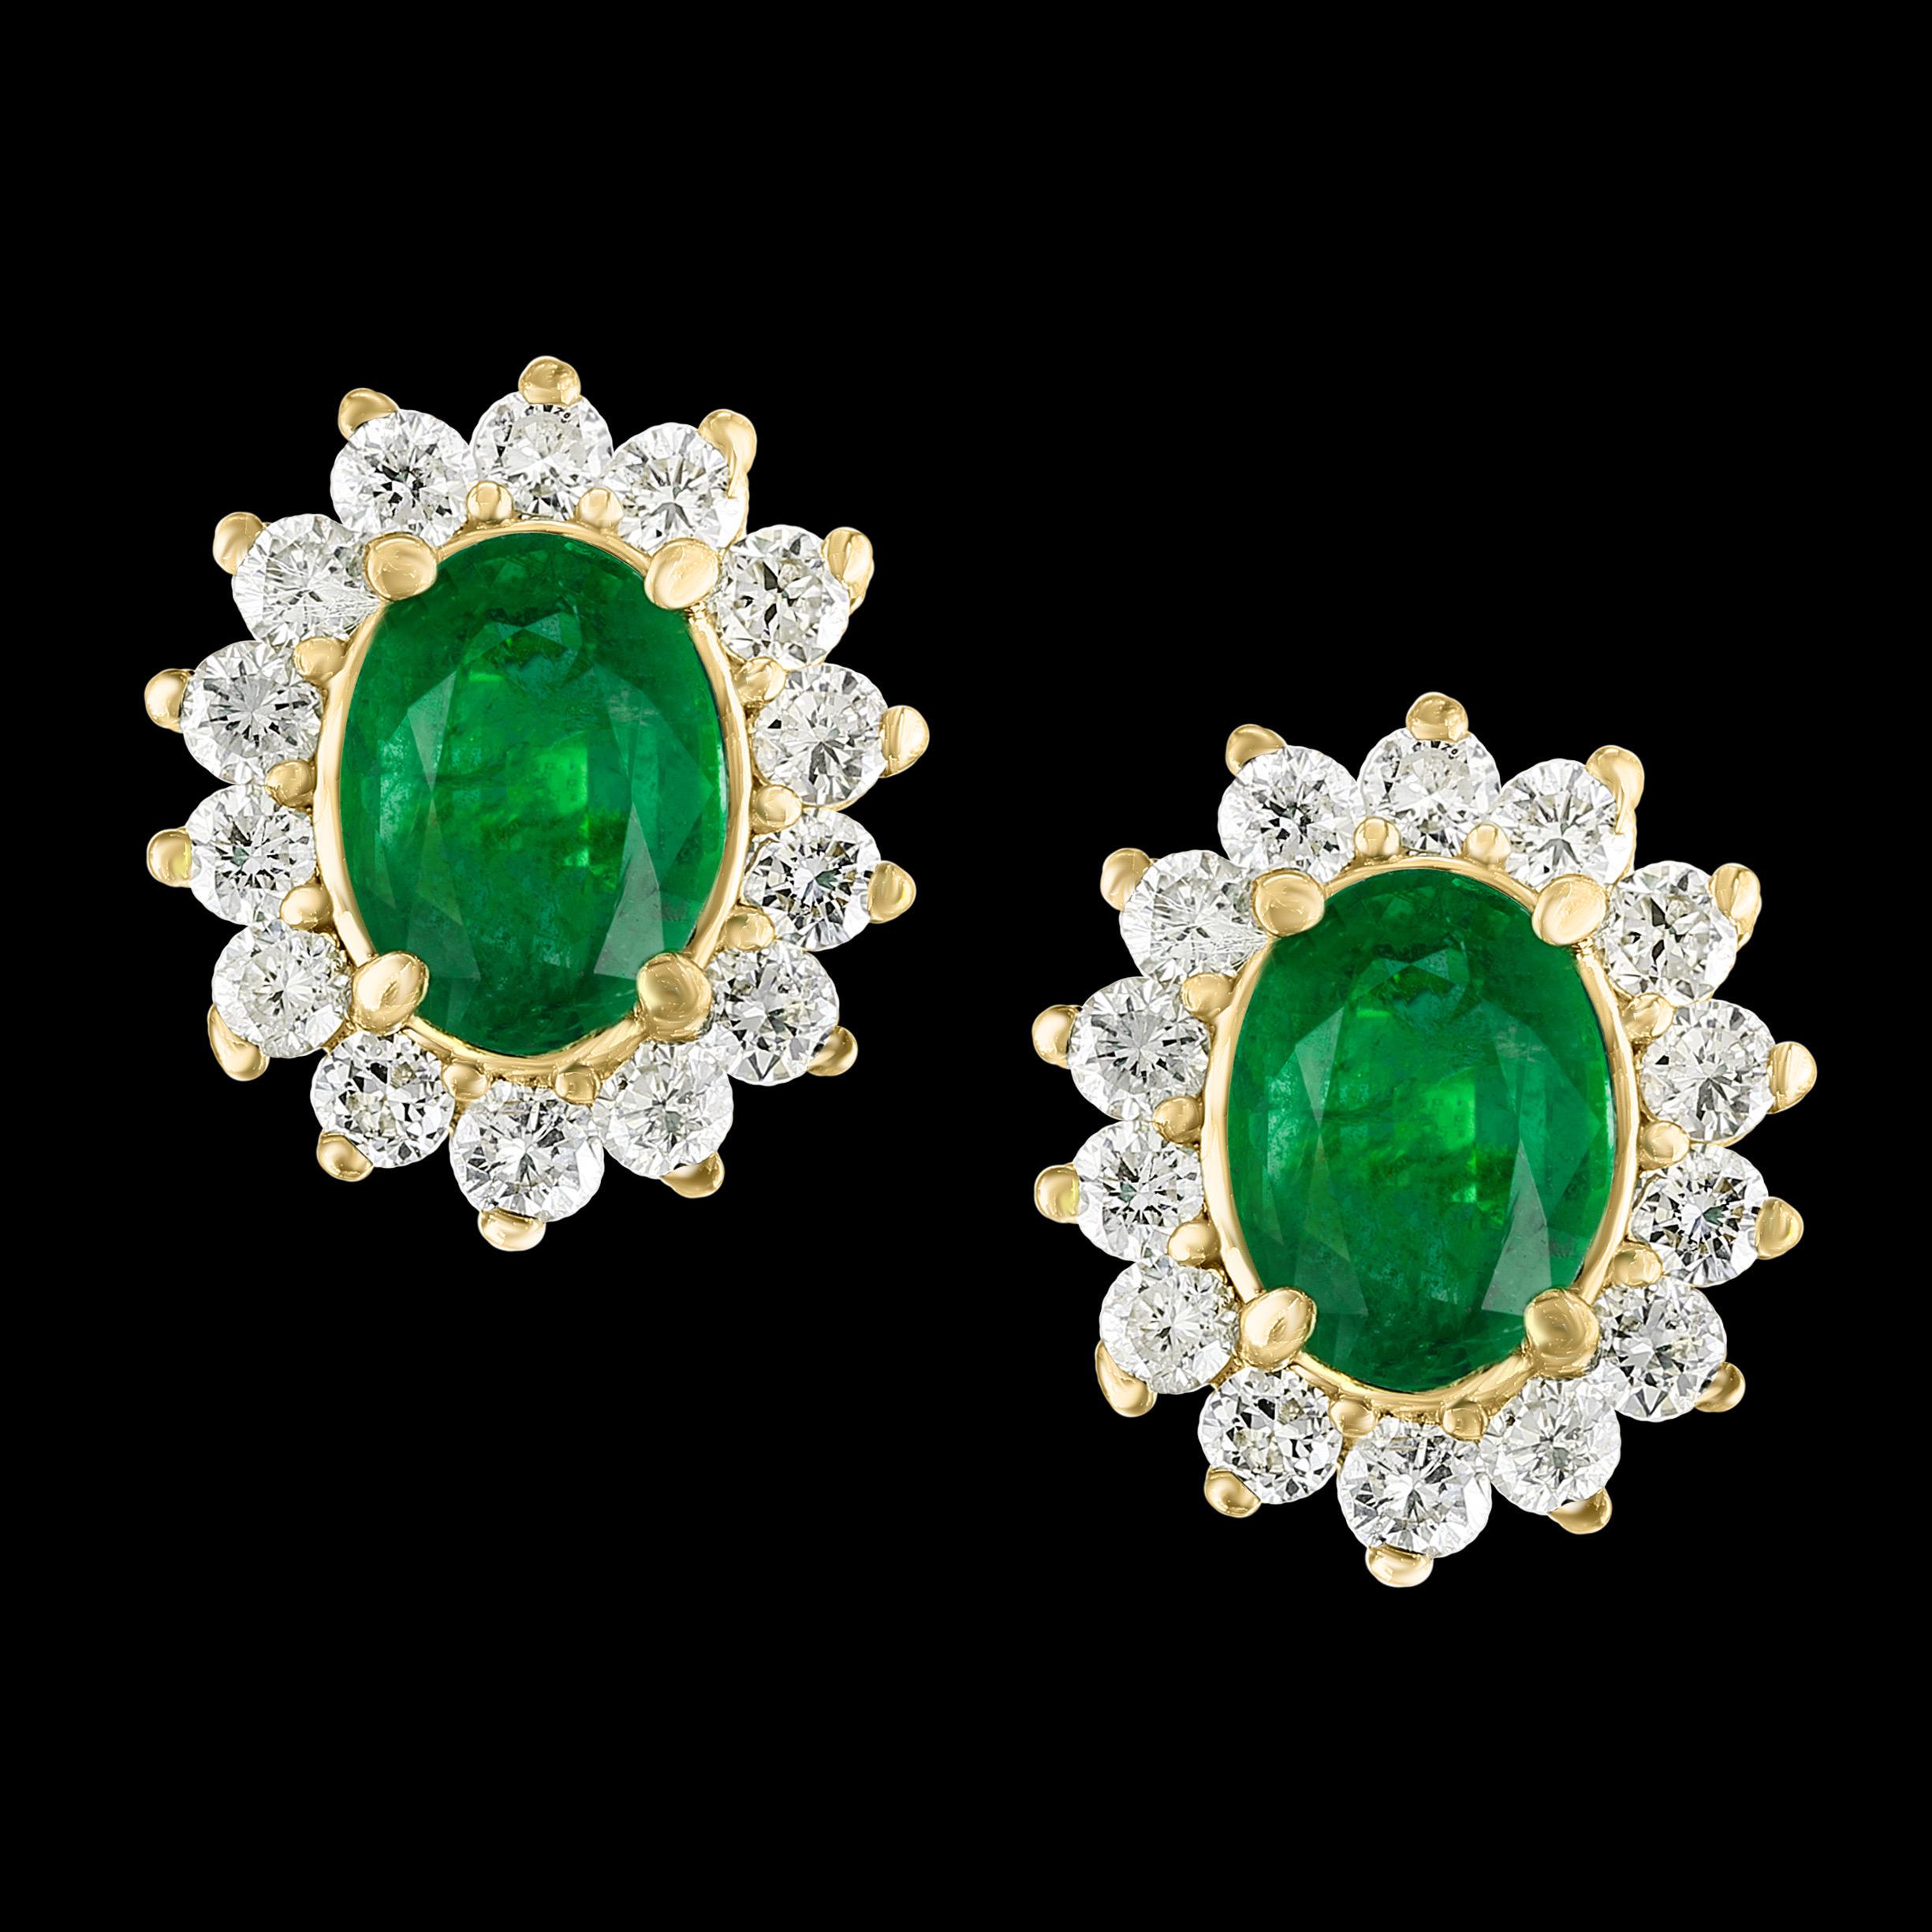 Oval Cut 2.8 Carat Oval Shape Emerald and Diamond Post Back Earrings 14 Karat Yellow Gold